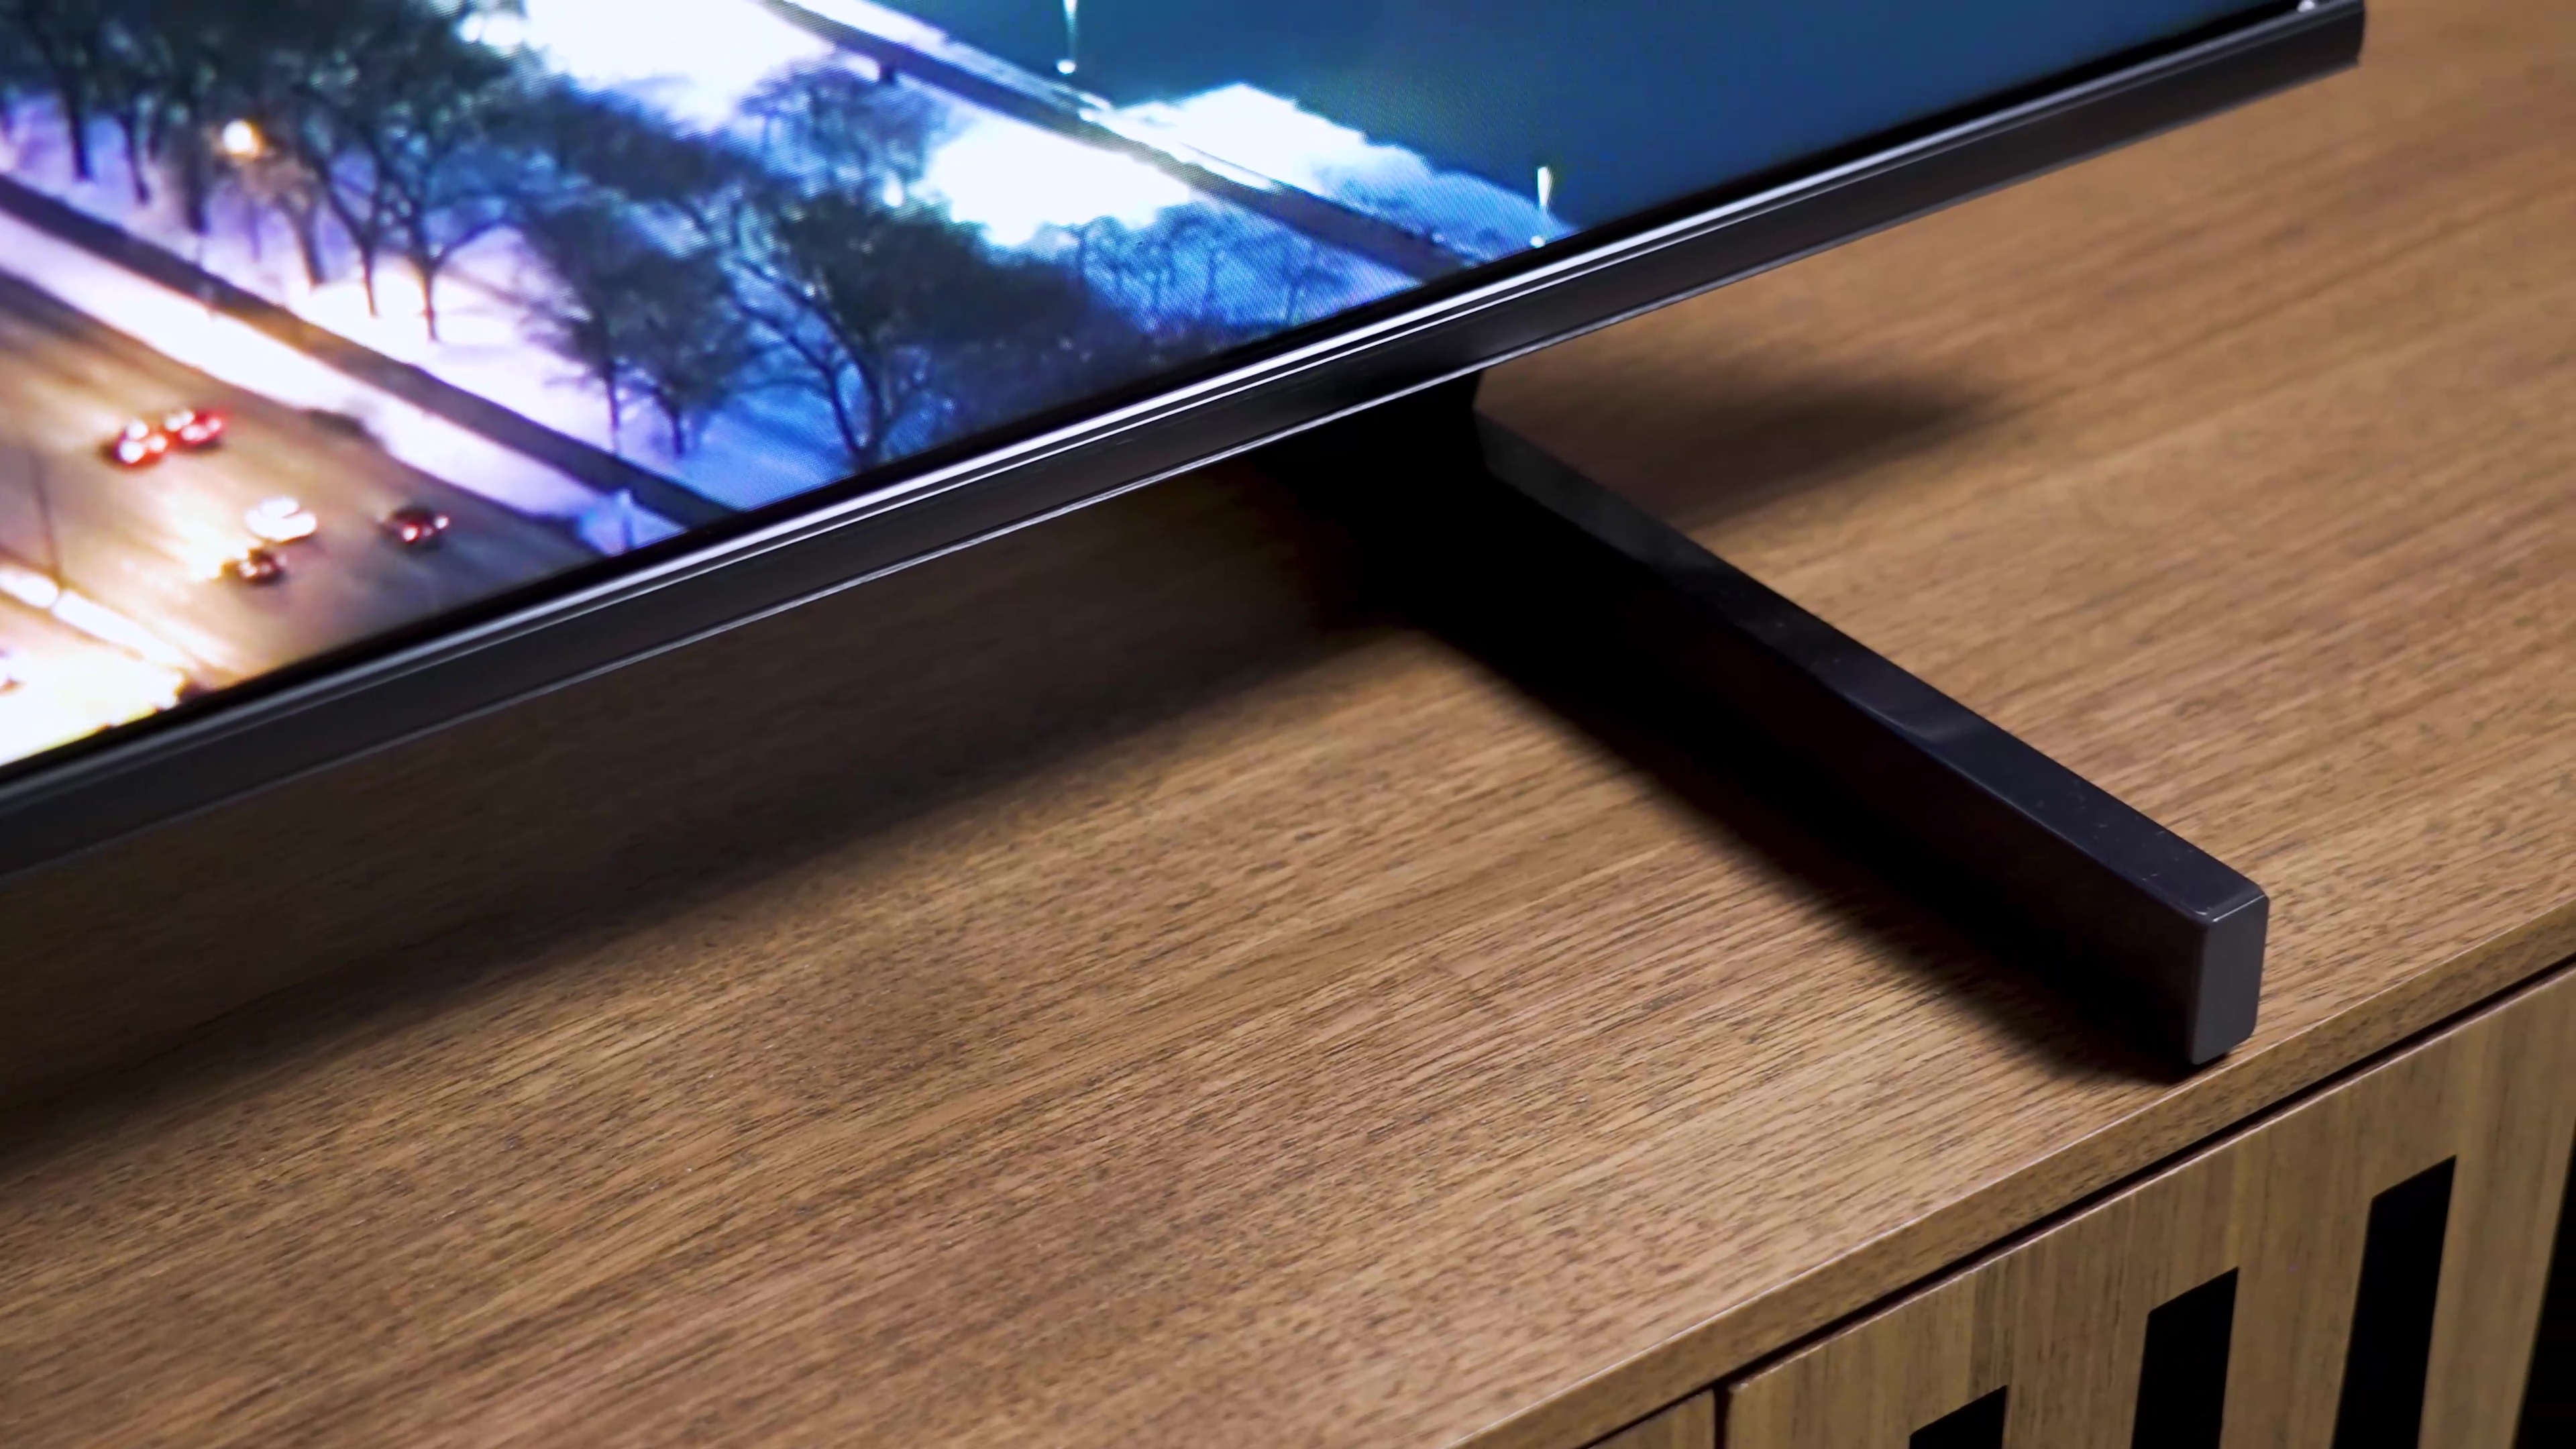 Hisense U7K Mini-LED ULED 4K TV – A game-changer in home entertainment